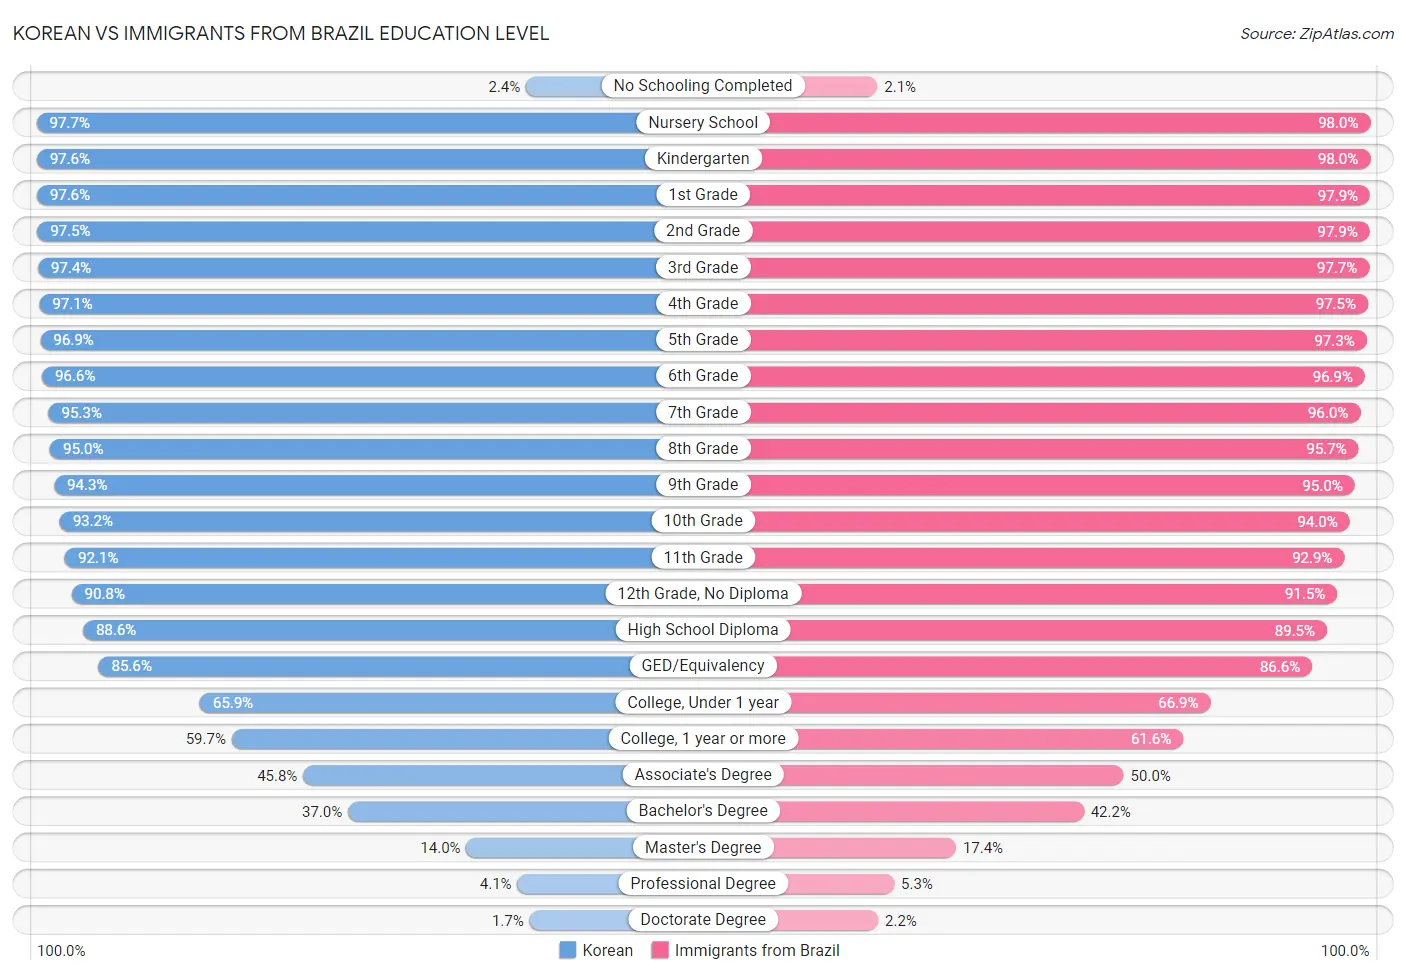 Korean vs Immigrants from Brazil Education Level